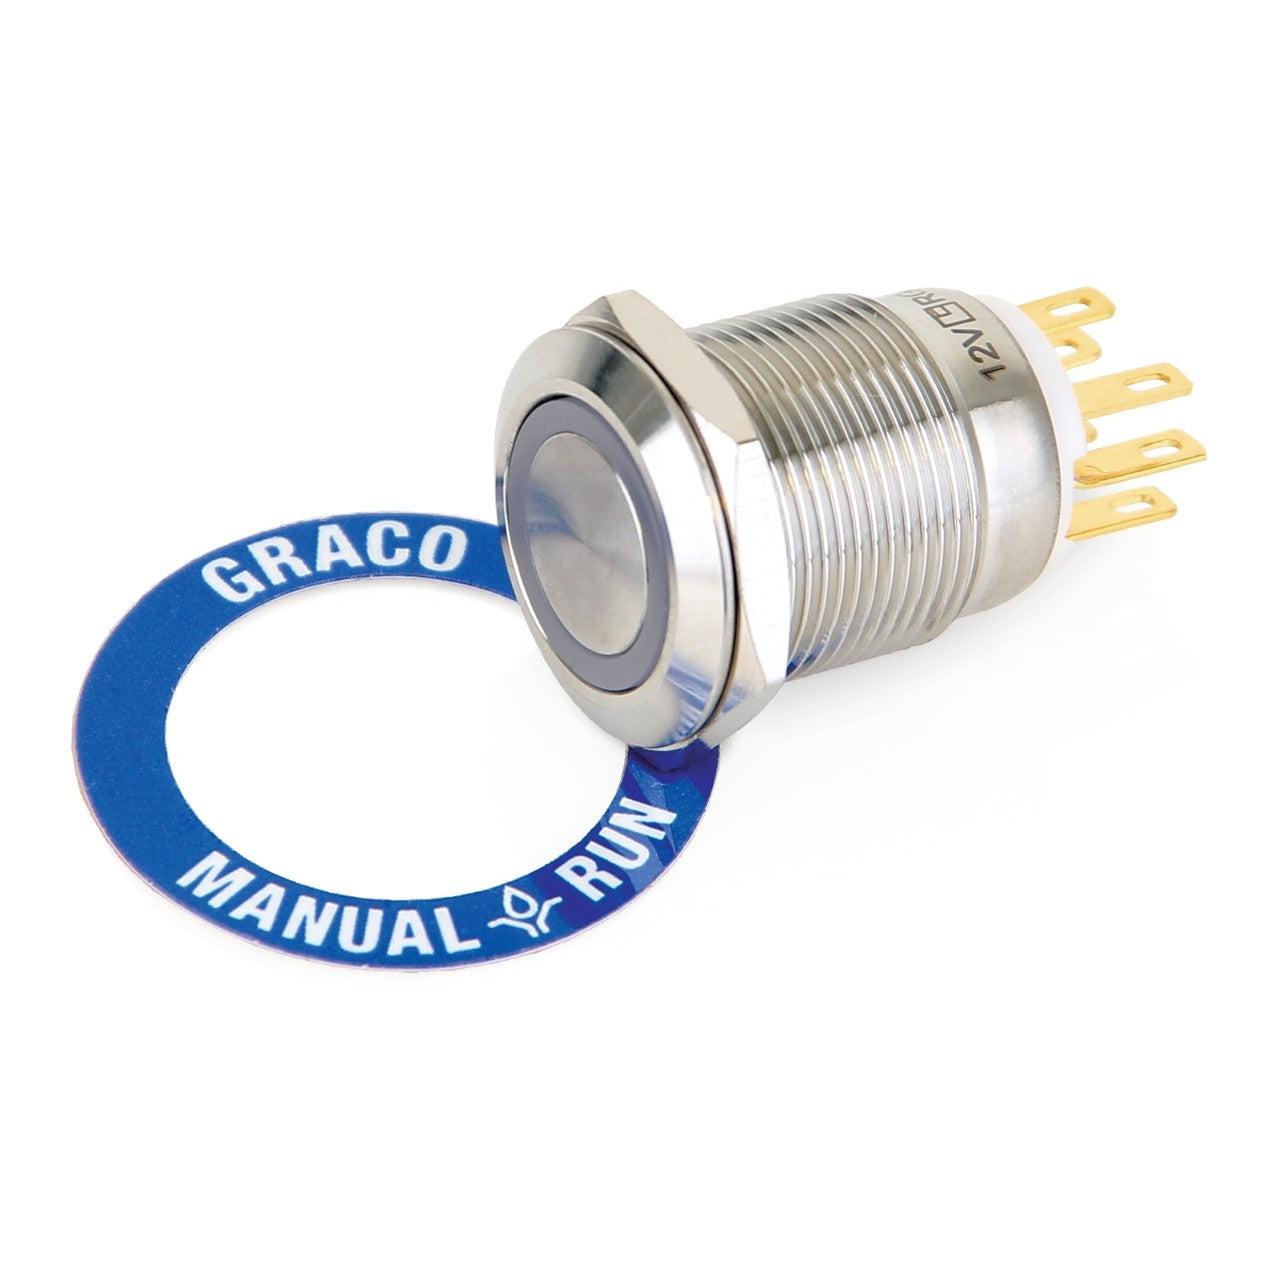 G-Series Pump Accessories - Remote Manual Run/Monitoring Light - 12 VDC